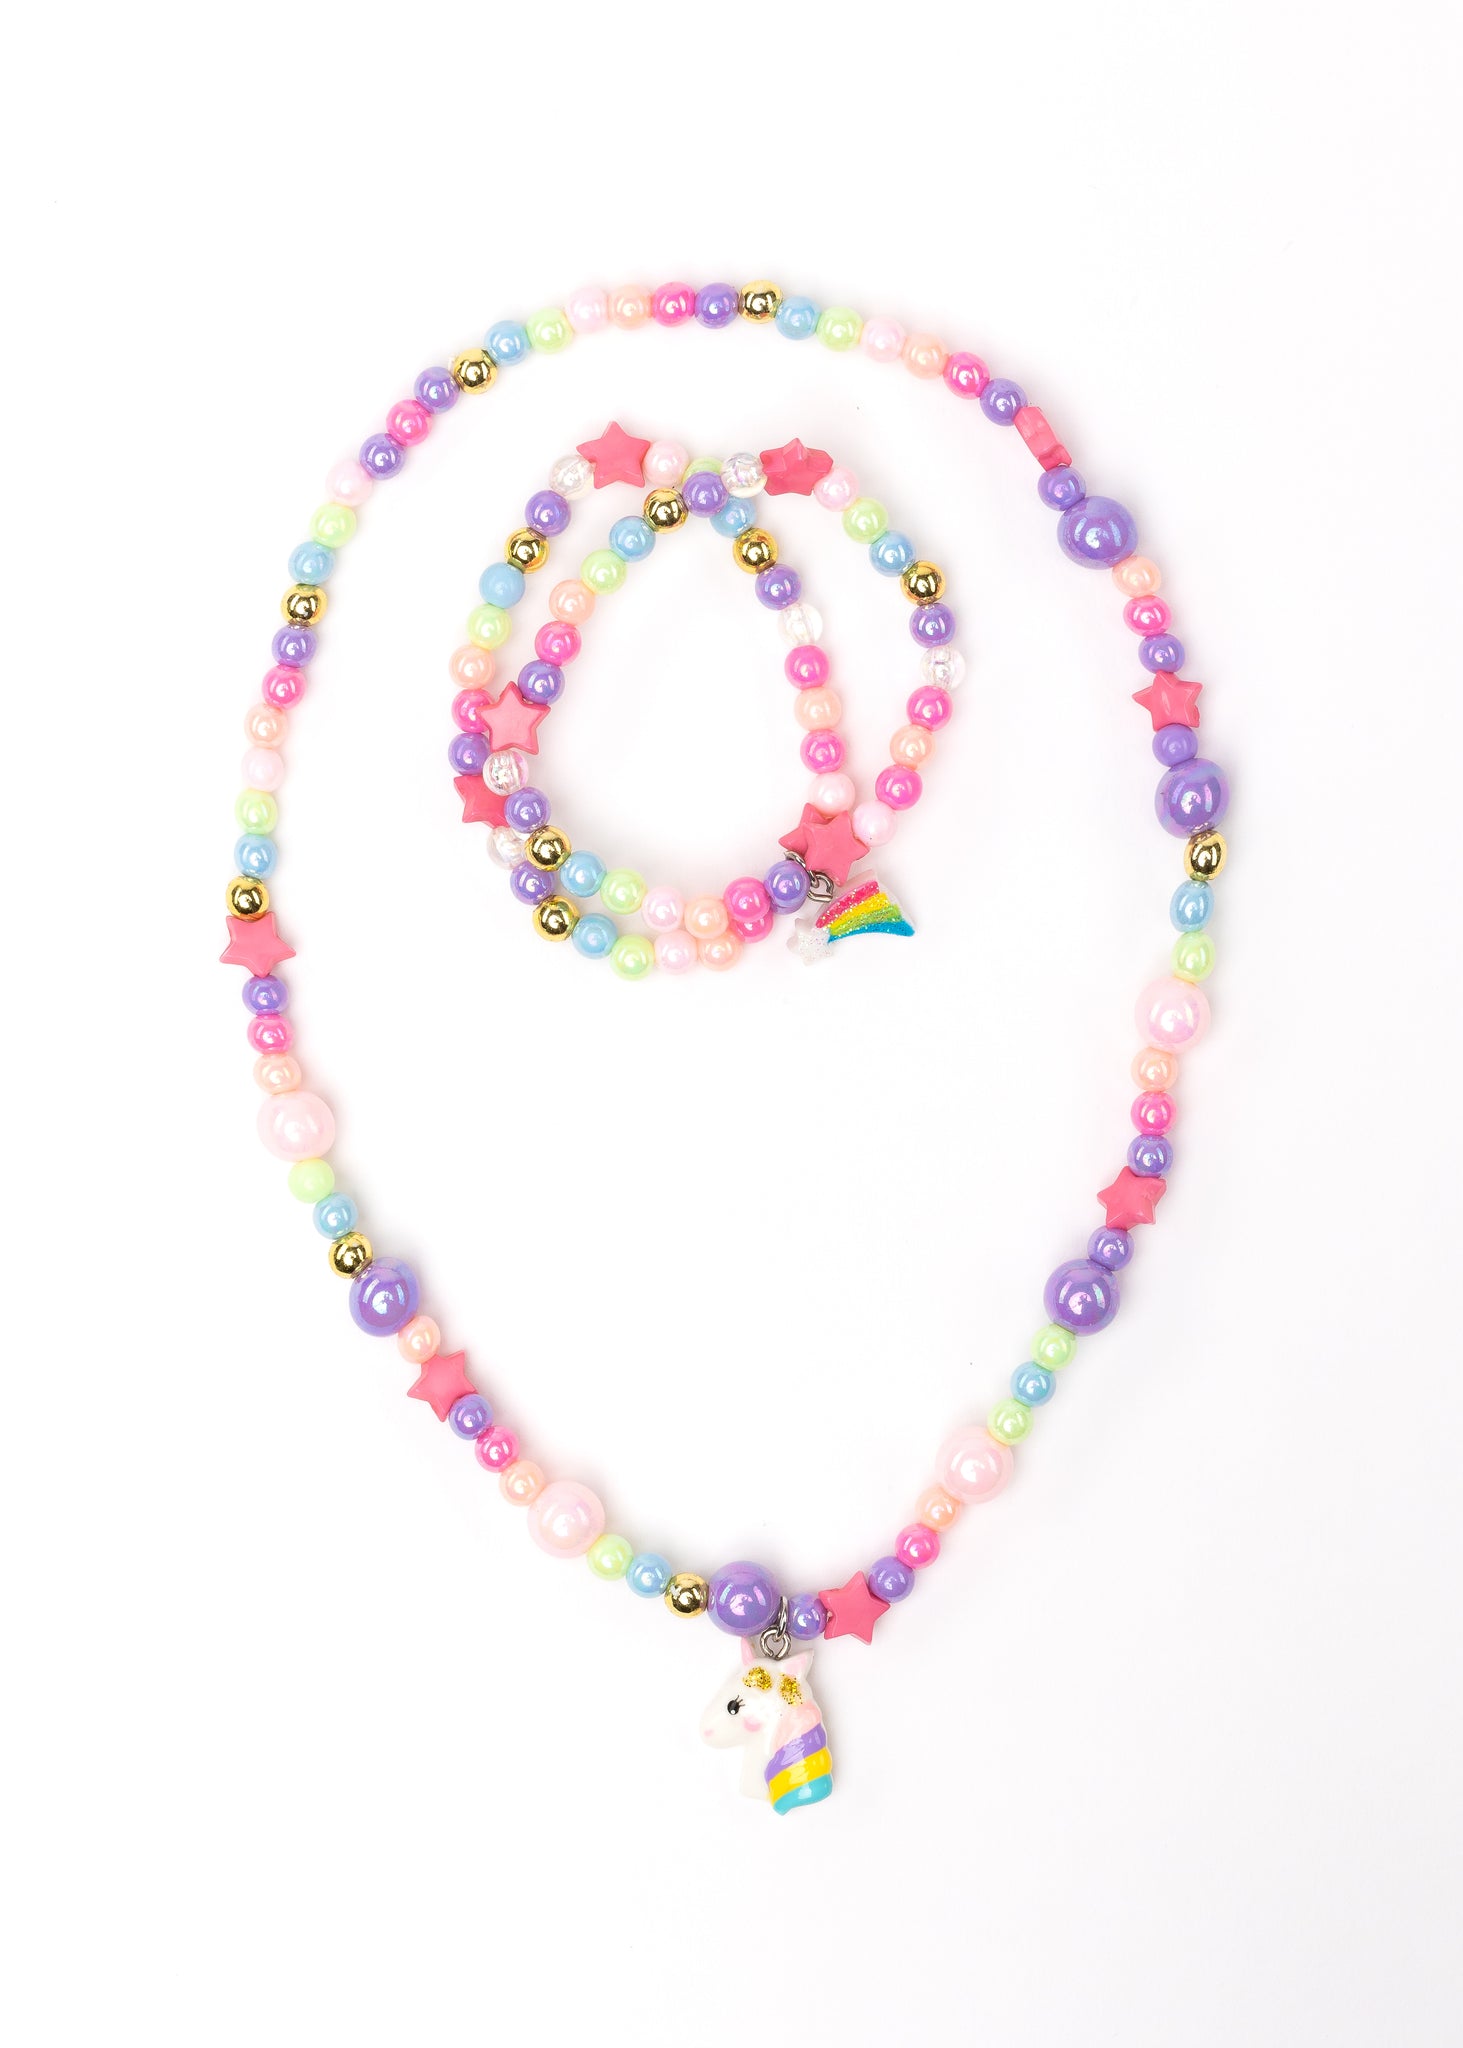 Cheerful Starry Unicorn Necklace and Bracelet Set